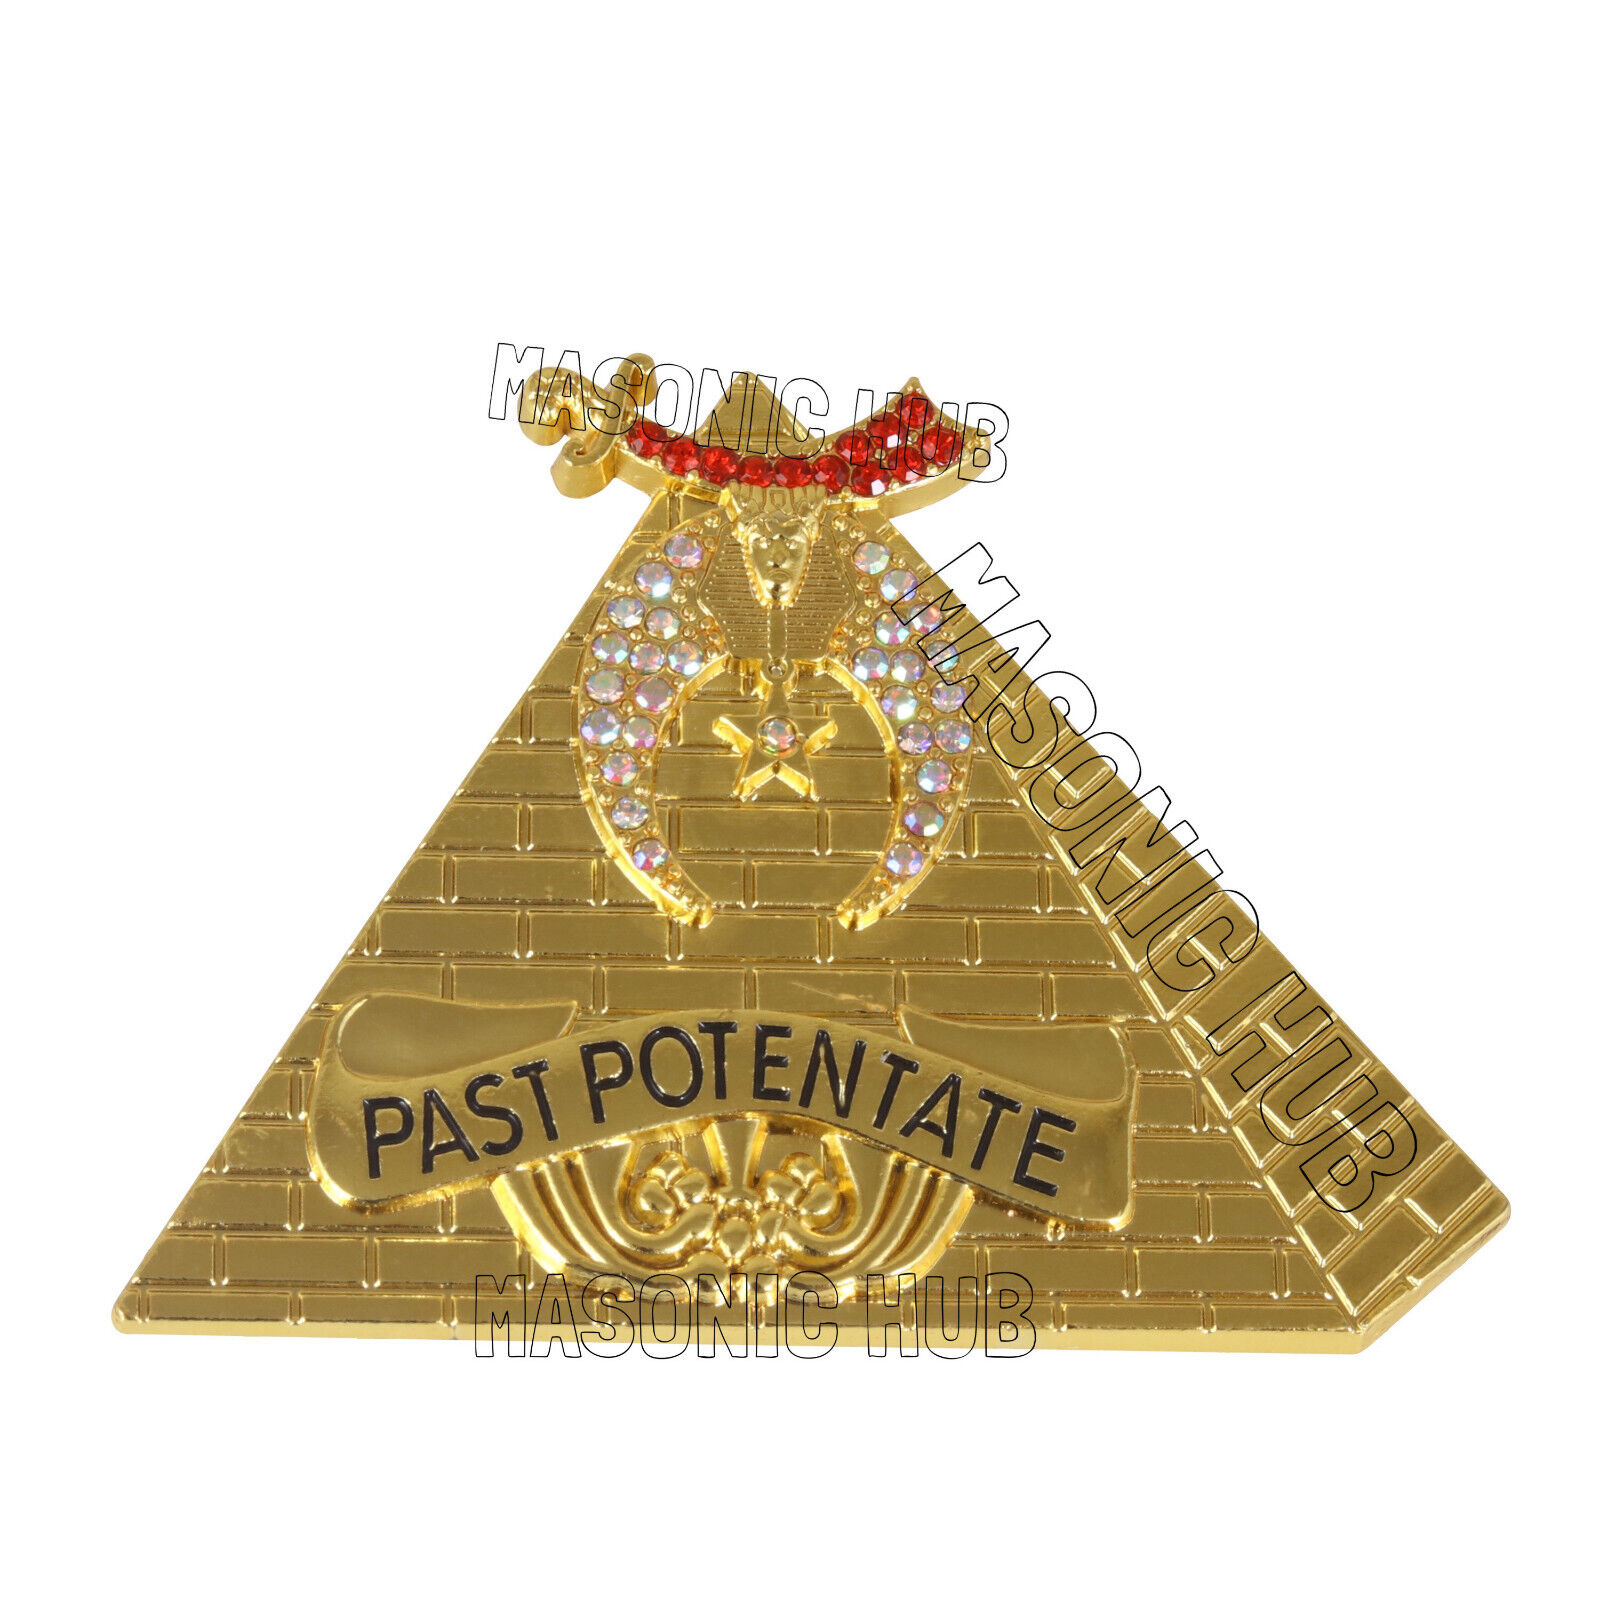 Masonic Regalia Past Potentate Collar Jewel Gold Plated with Rhinestons -Pyramid